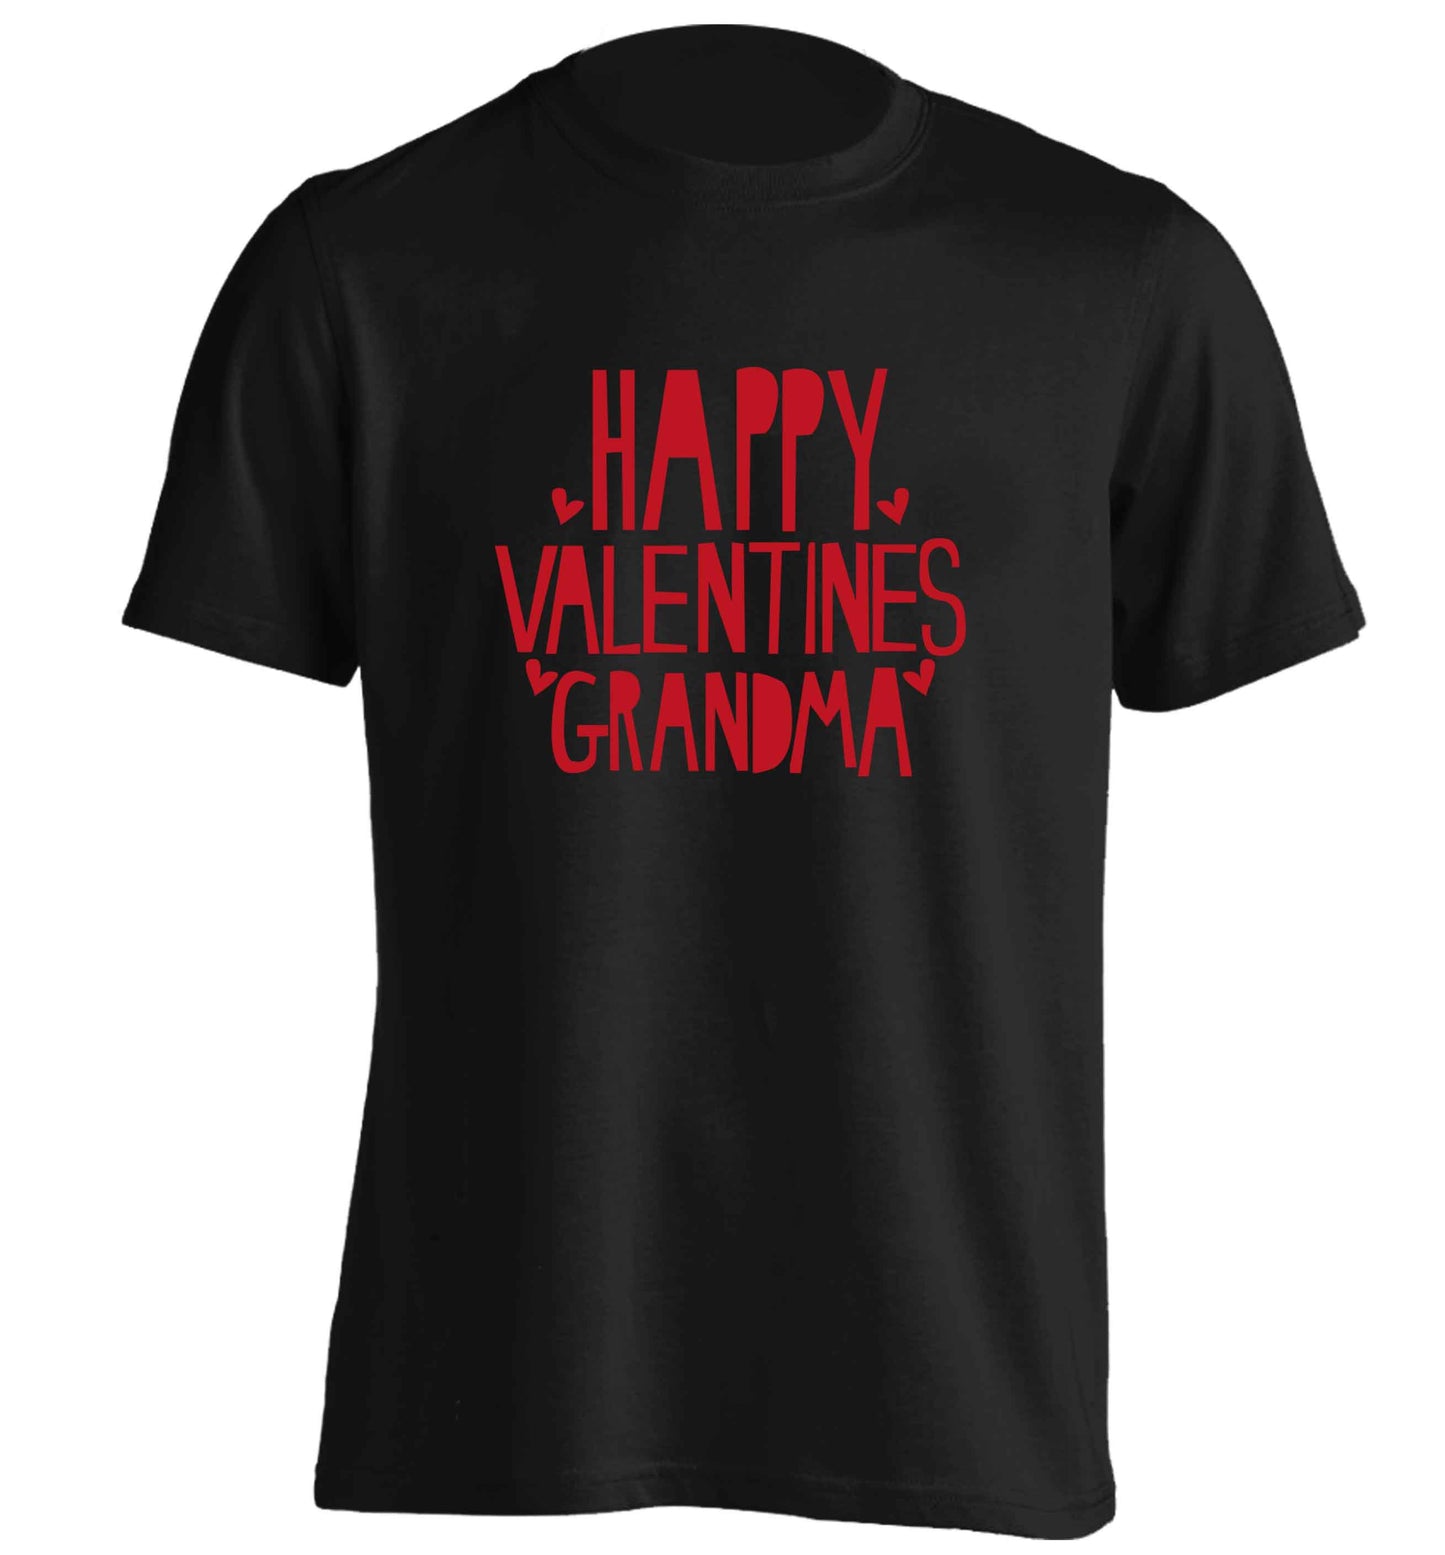 Happy valentines grandma adults unisex black Tshirt 2XL